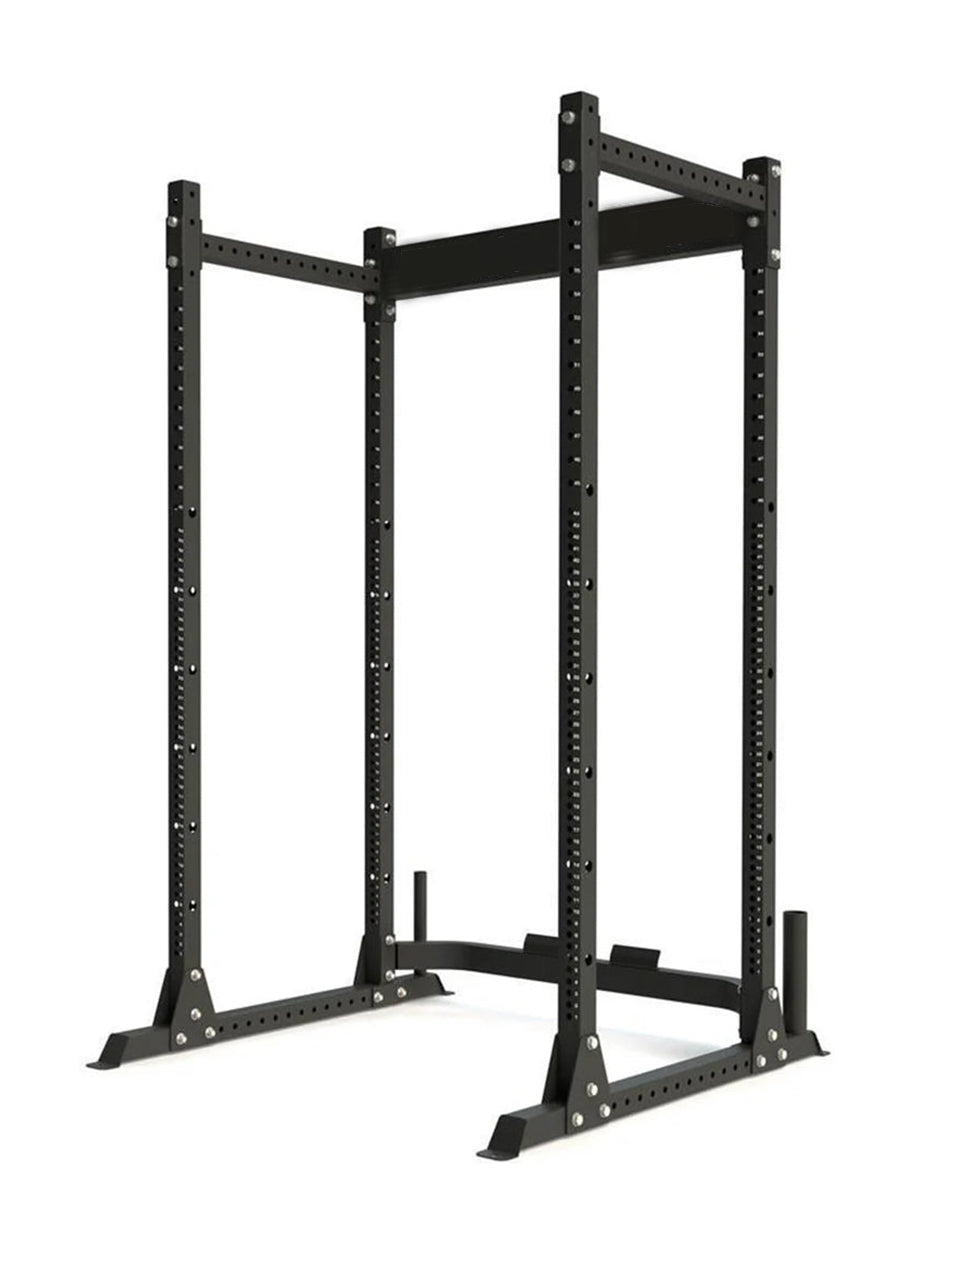 1441 Fitness Power Cage Squat Rack - 41FG04